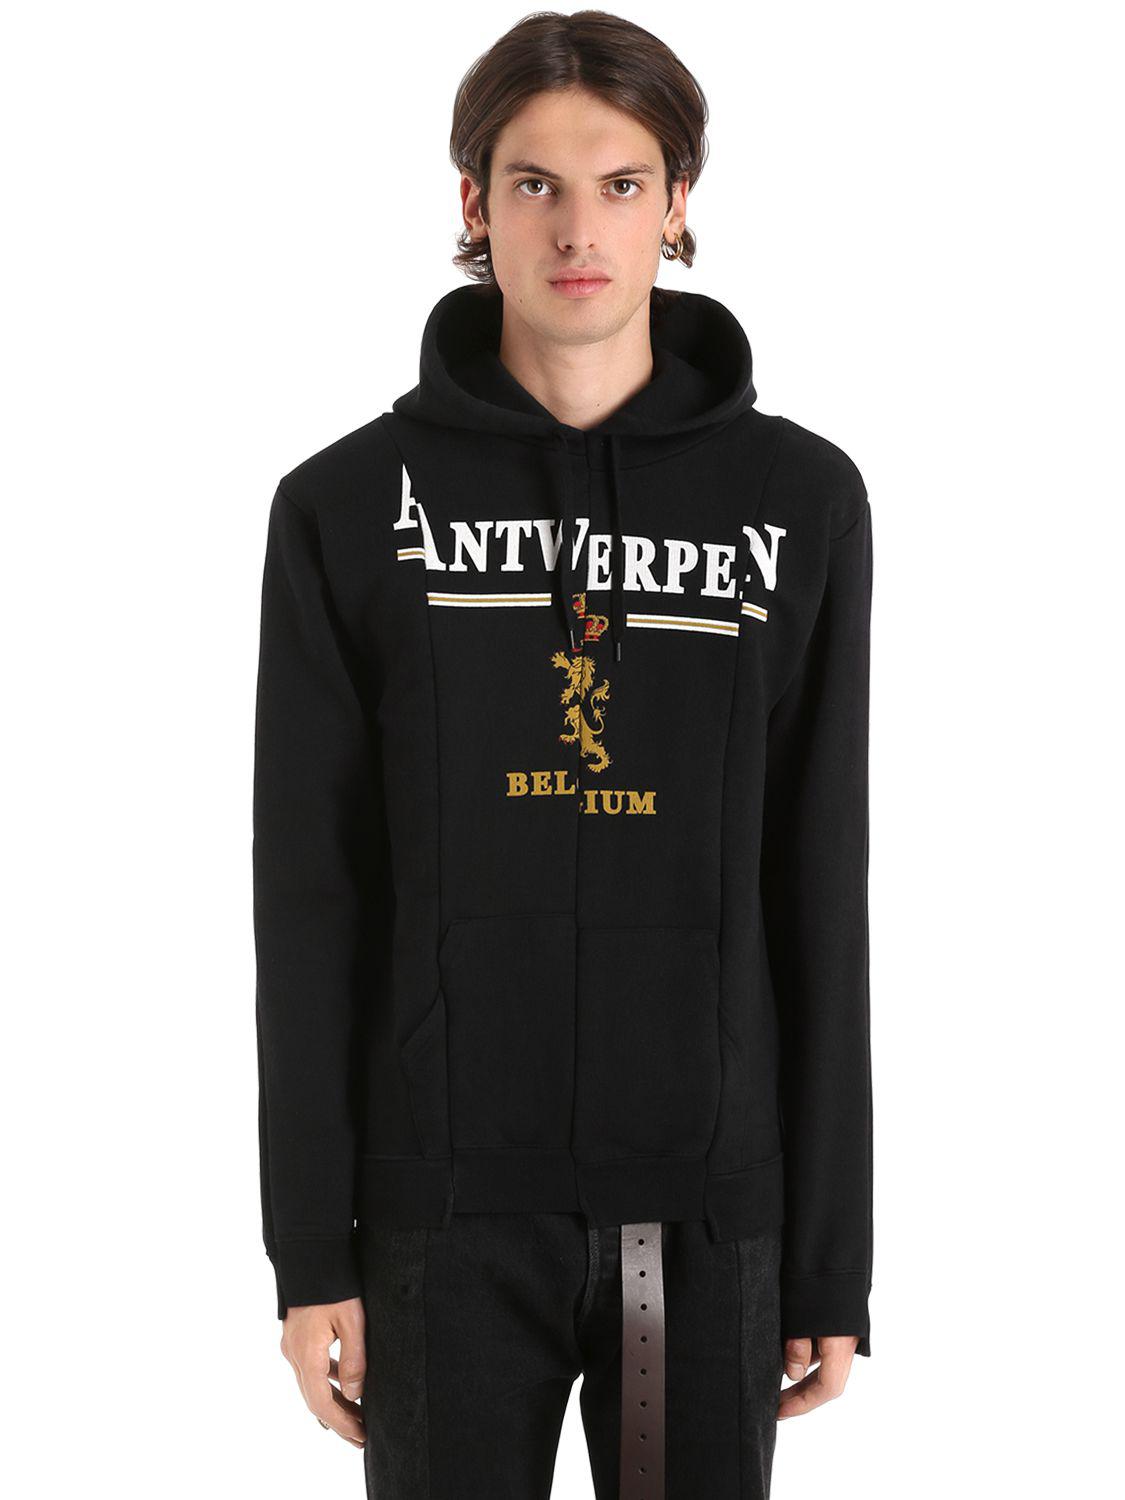 Vetements Antwerpen Cut Up Hooded Sweatshirt in Black for Men - Lyst